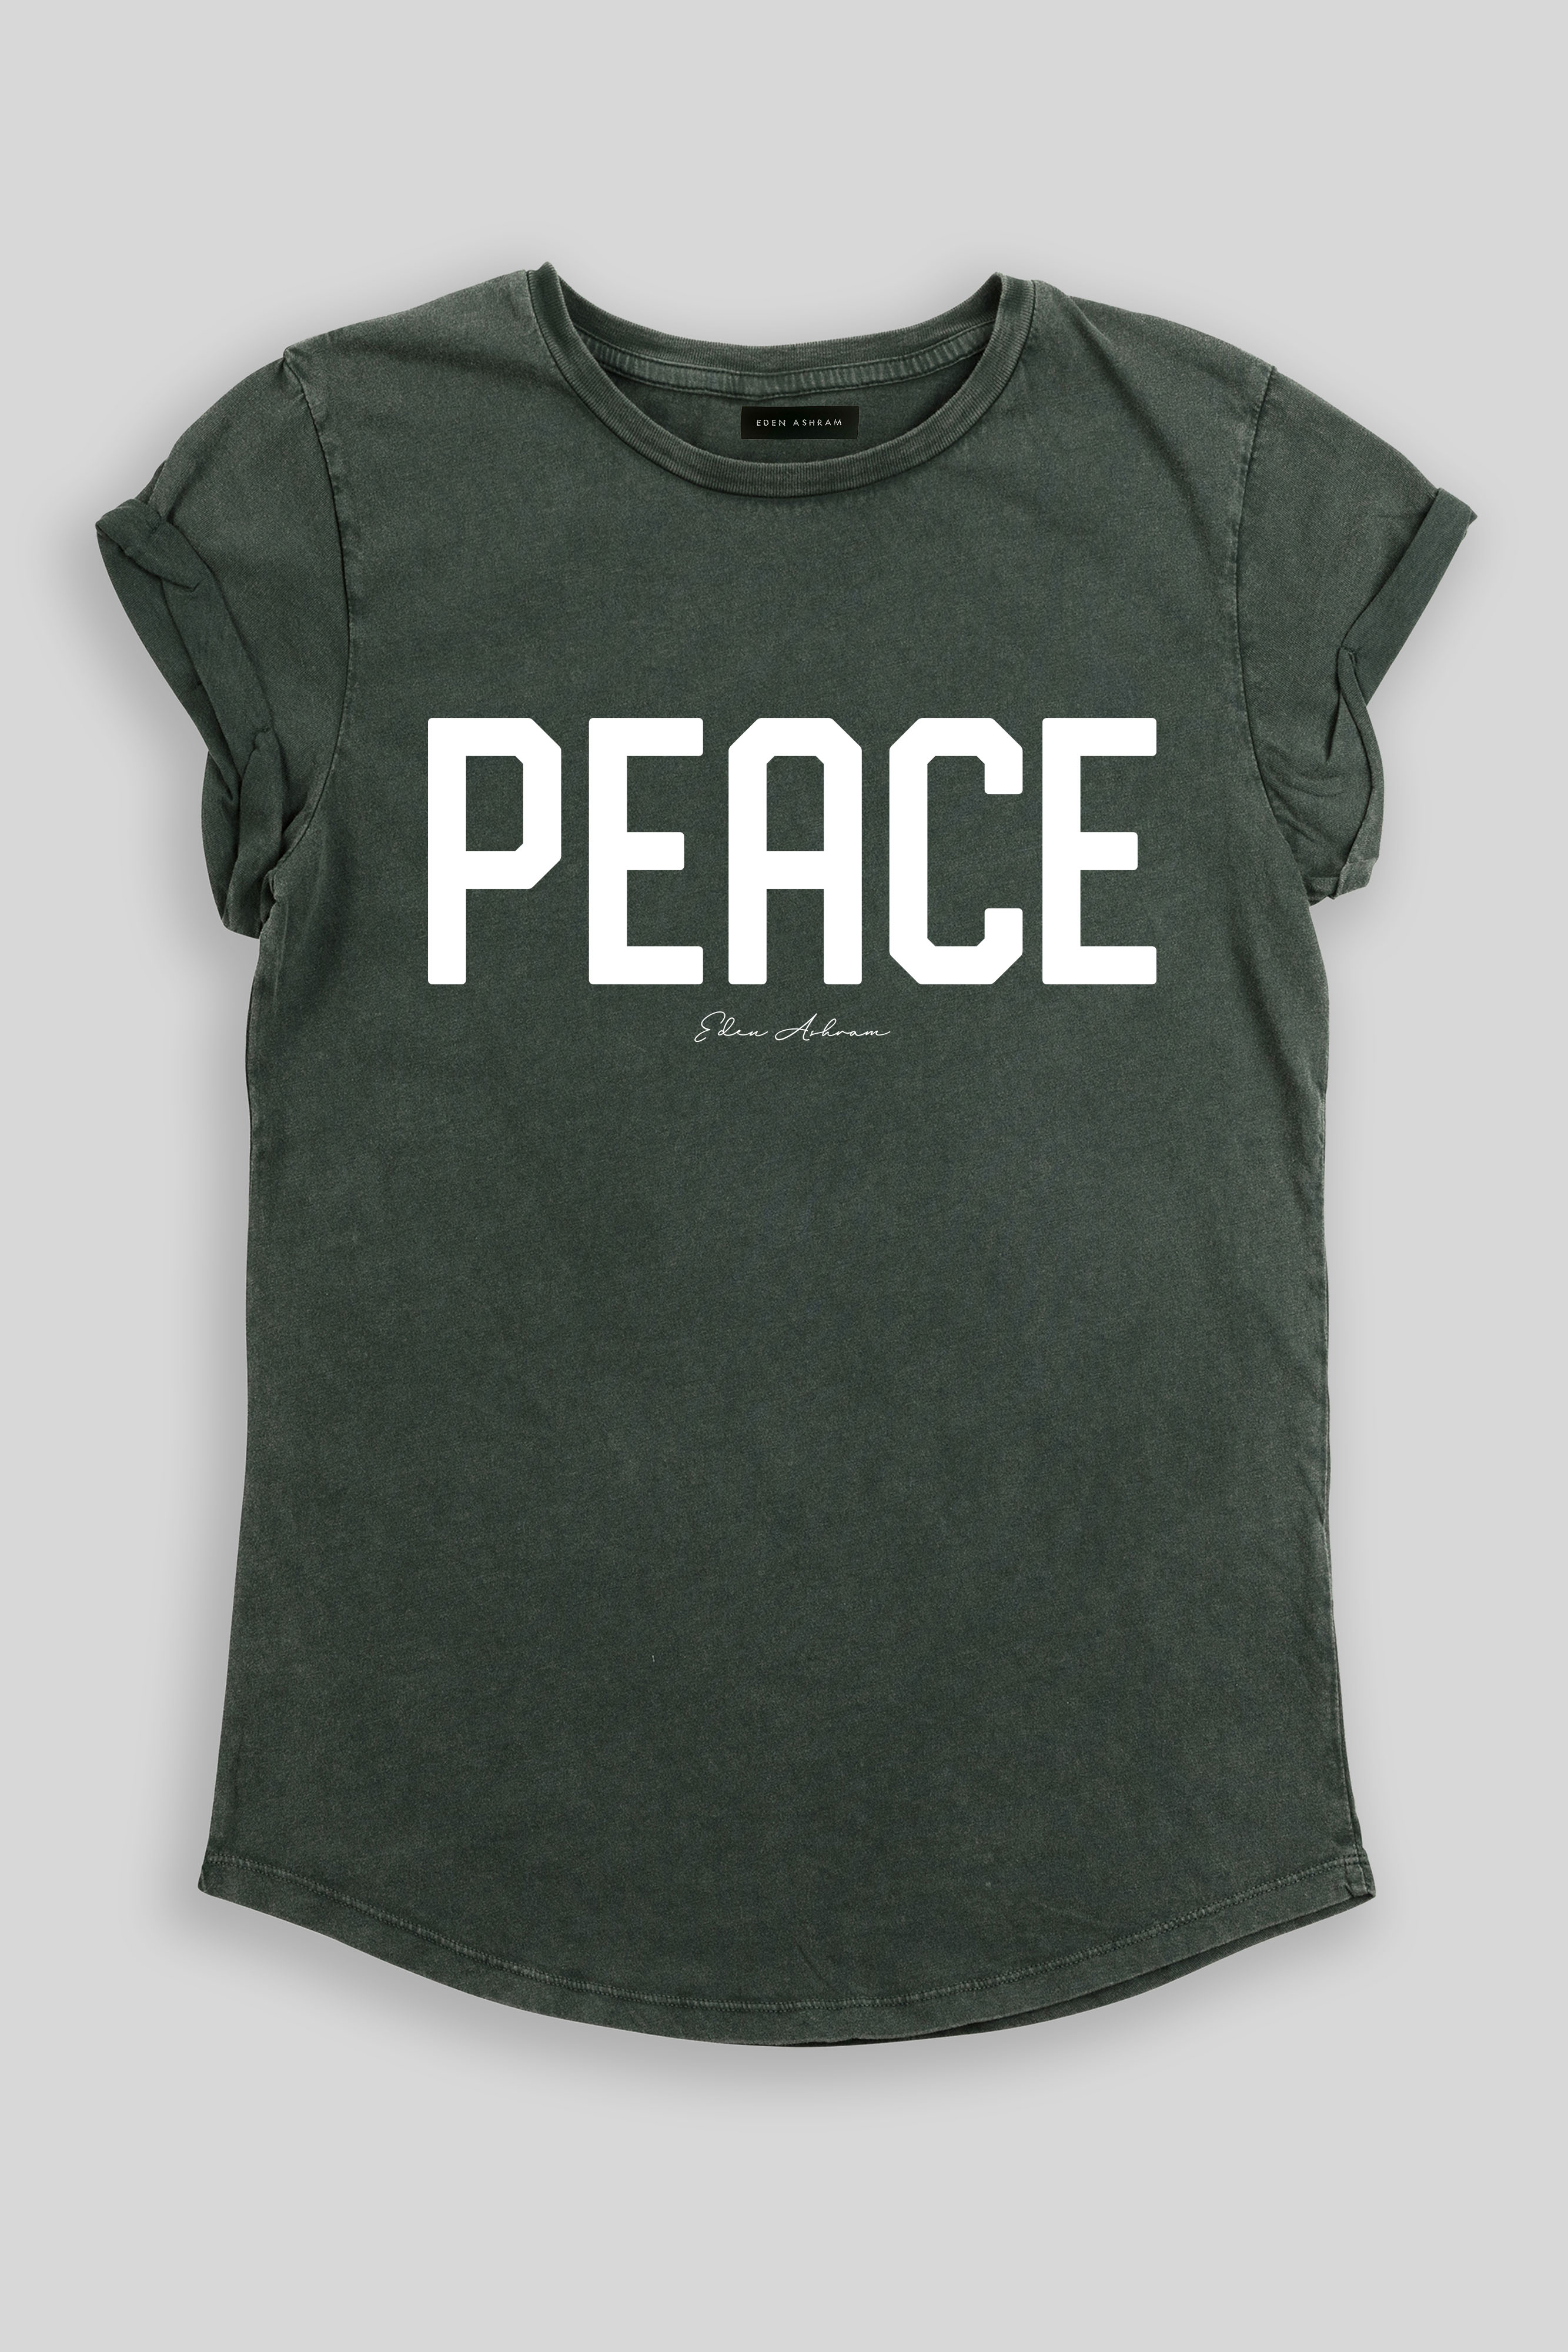 EDEN ASHRAM PEACE Rolled Sleeve T-Shirt Stonewash Green